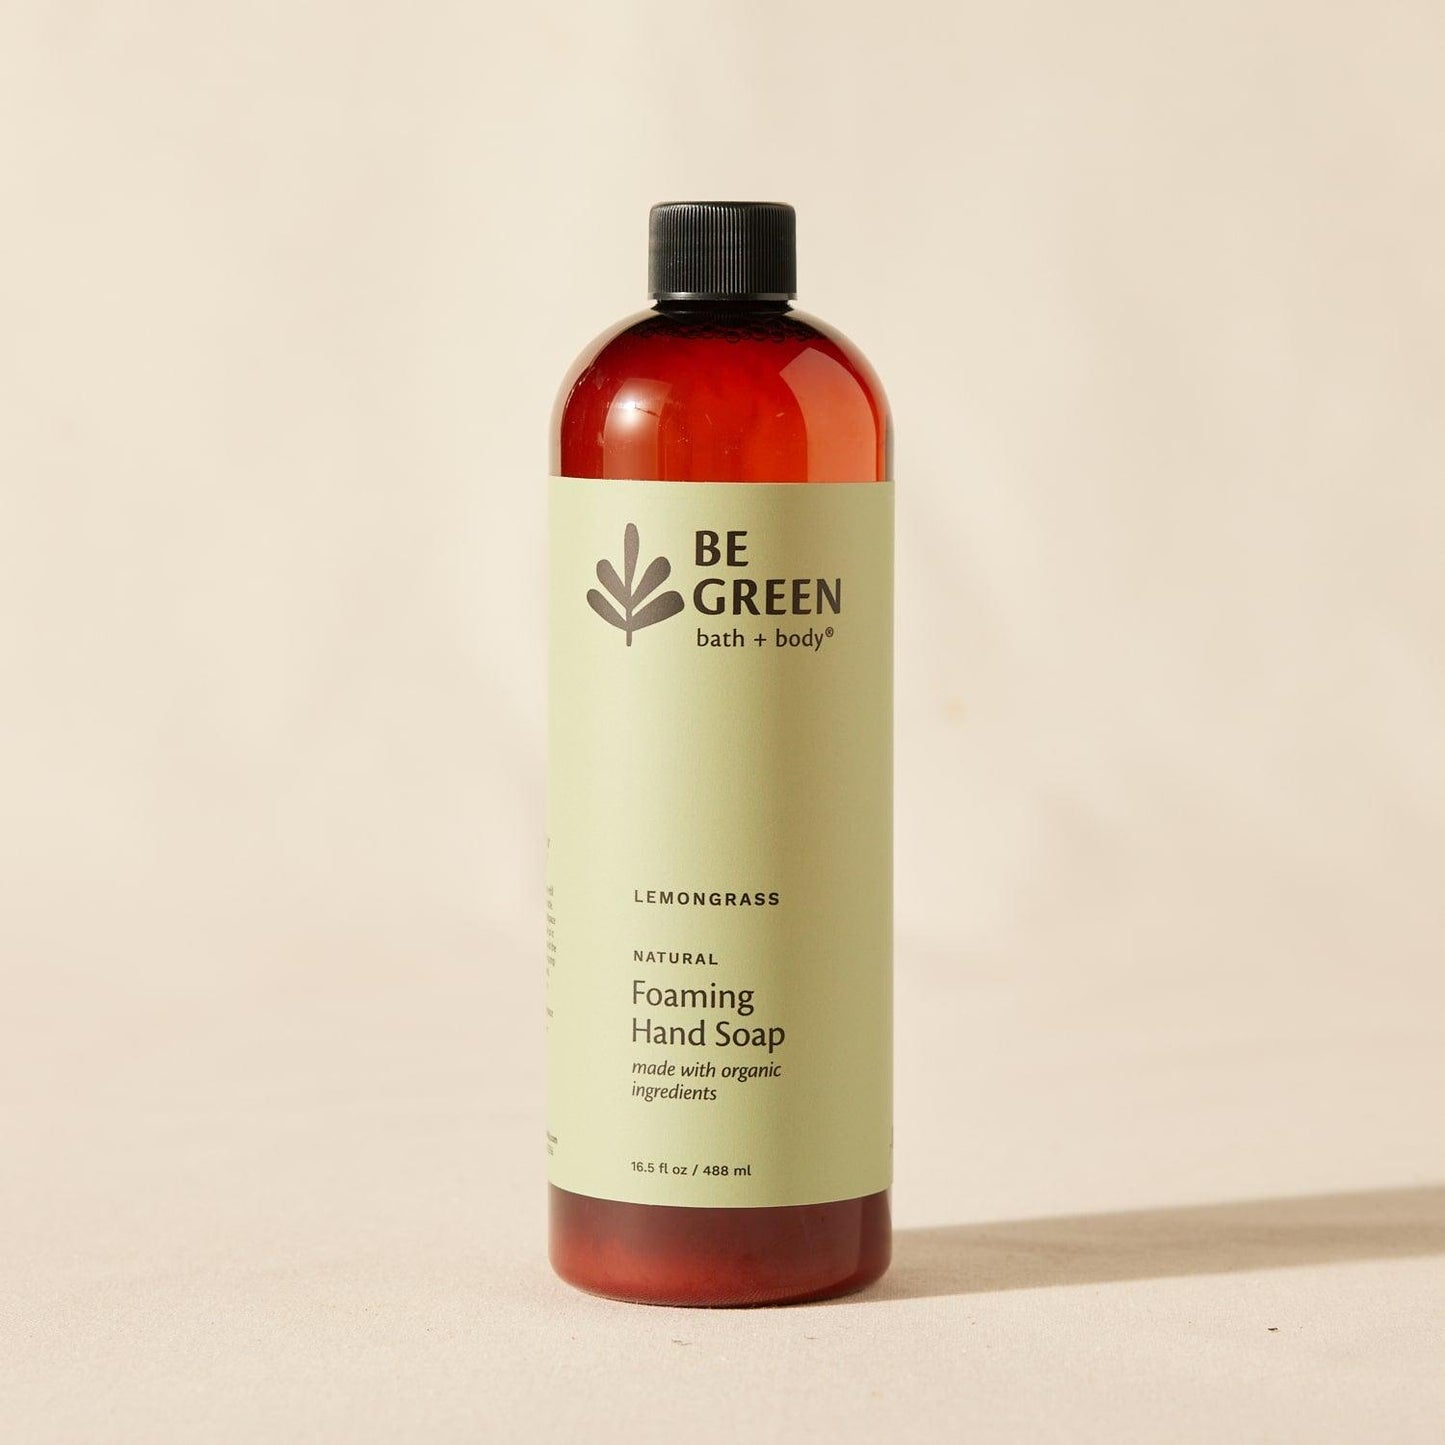 Lemongrass hand soap refill size